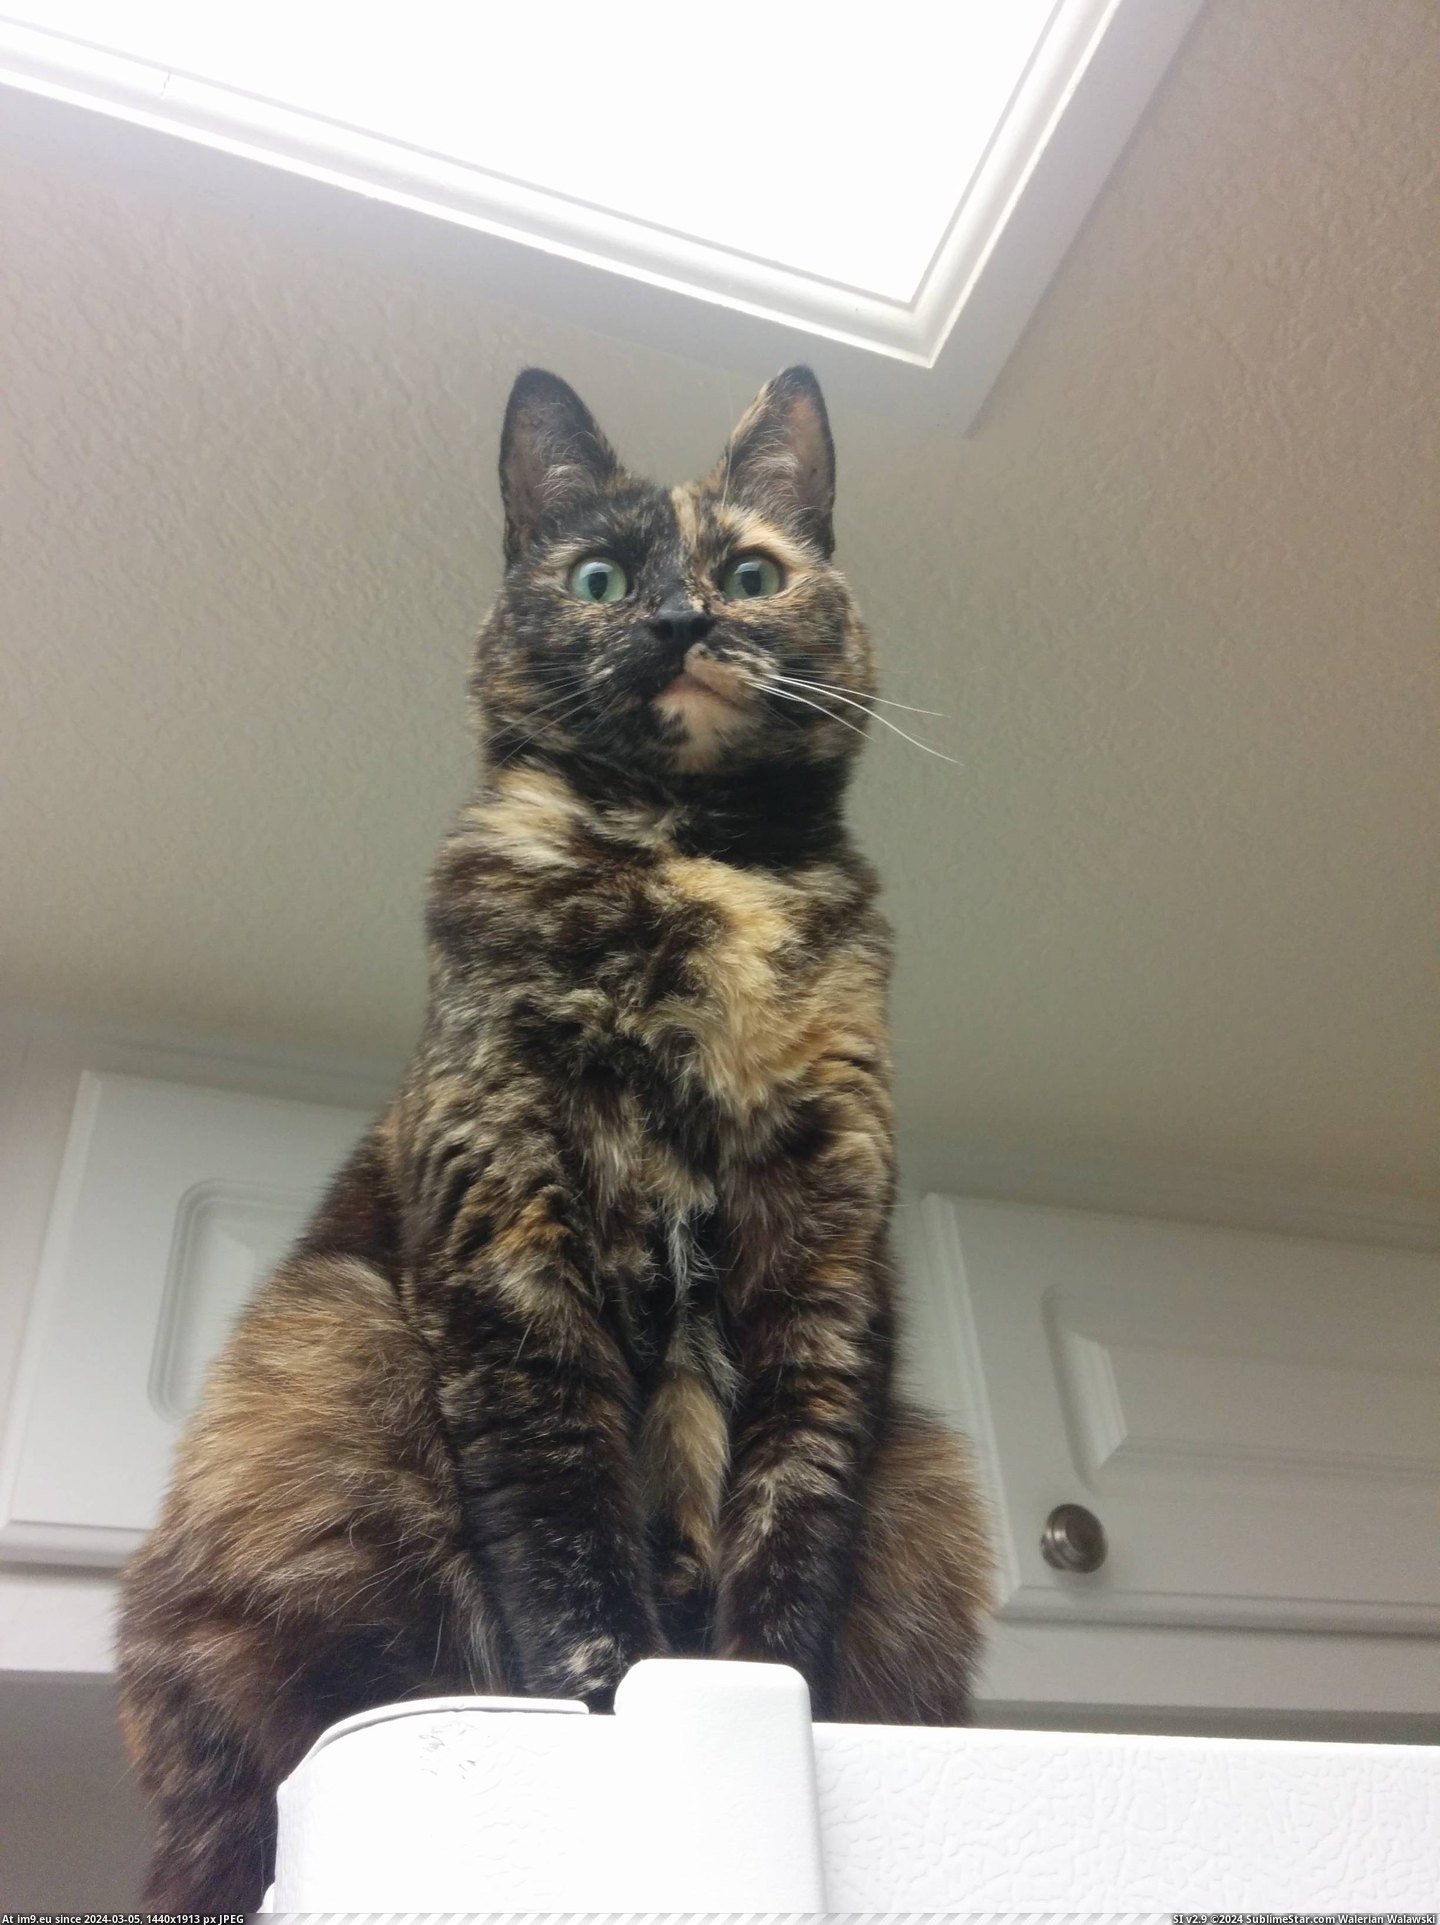 #Cats #Refrigerator #Guardian [Cats] Guardian of the refrigerator Pic. (Bild von album My r/CATS favs))